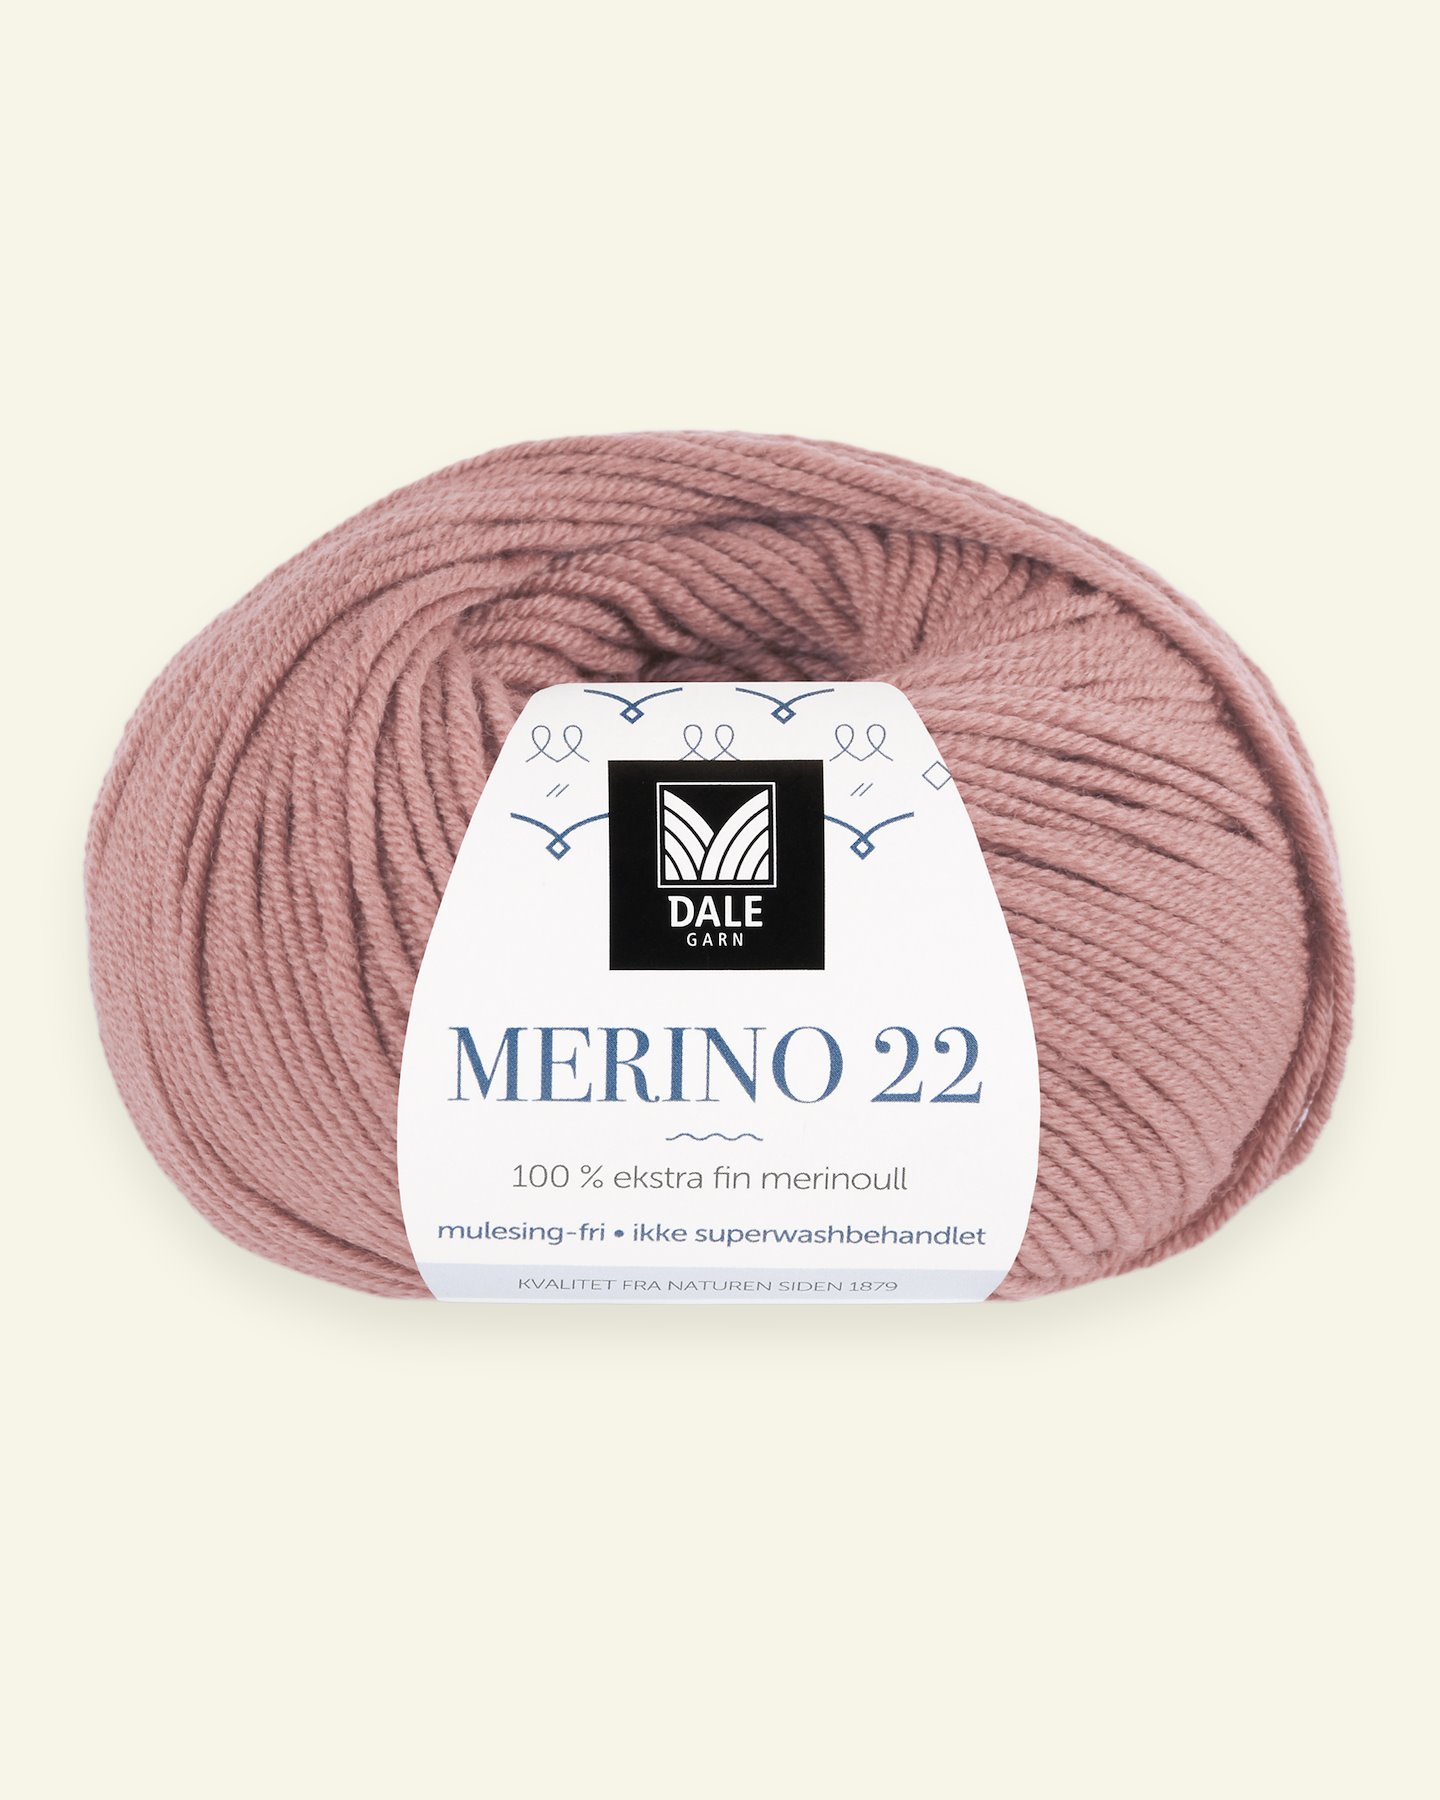 Dale Garn, 100% Extrafeine Merino-Wolle "Merino 22", altrosa (2016) 90000377_pack